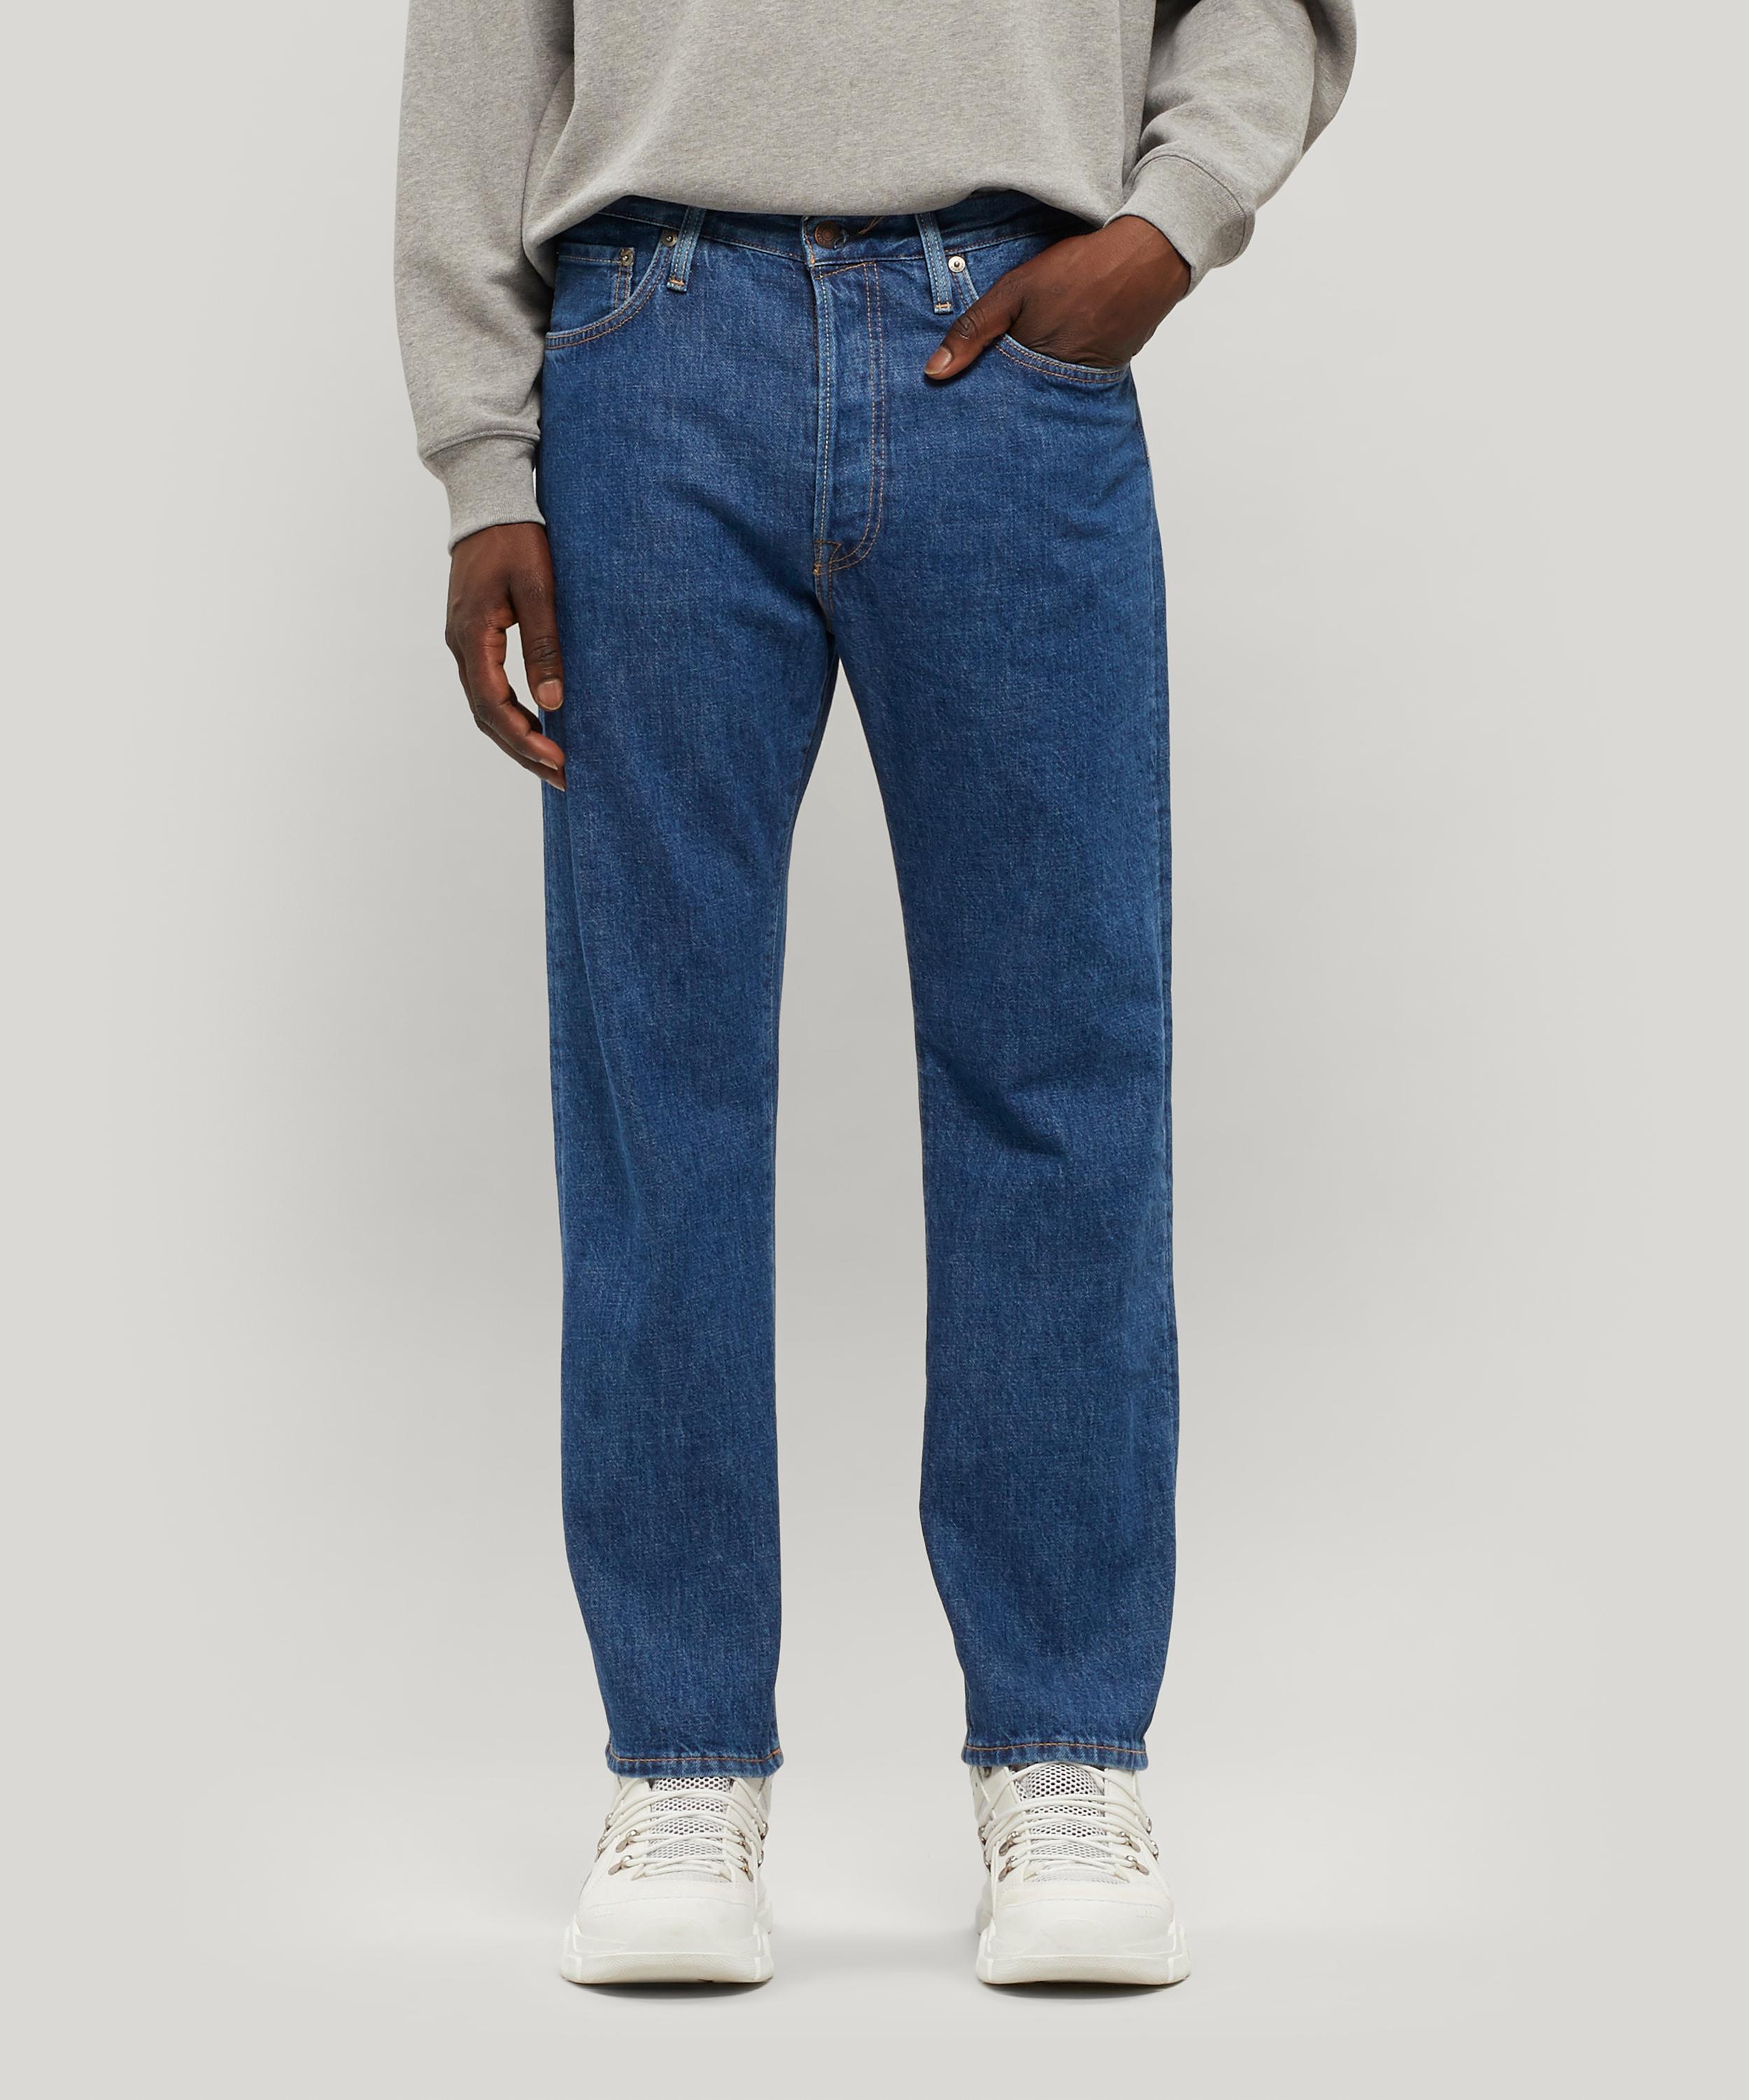 Kardinal Rahmen Nähmaschine jeans 2003 Graben Leeds Beeinflussen